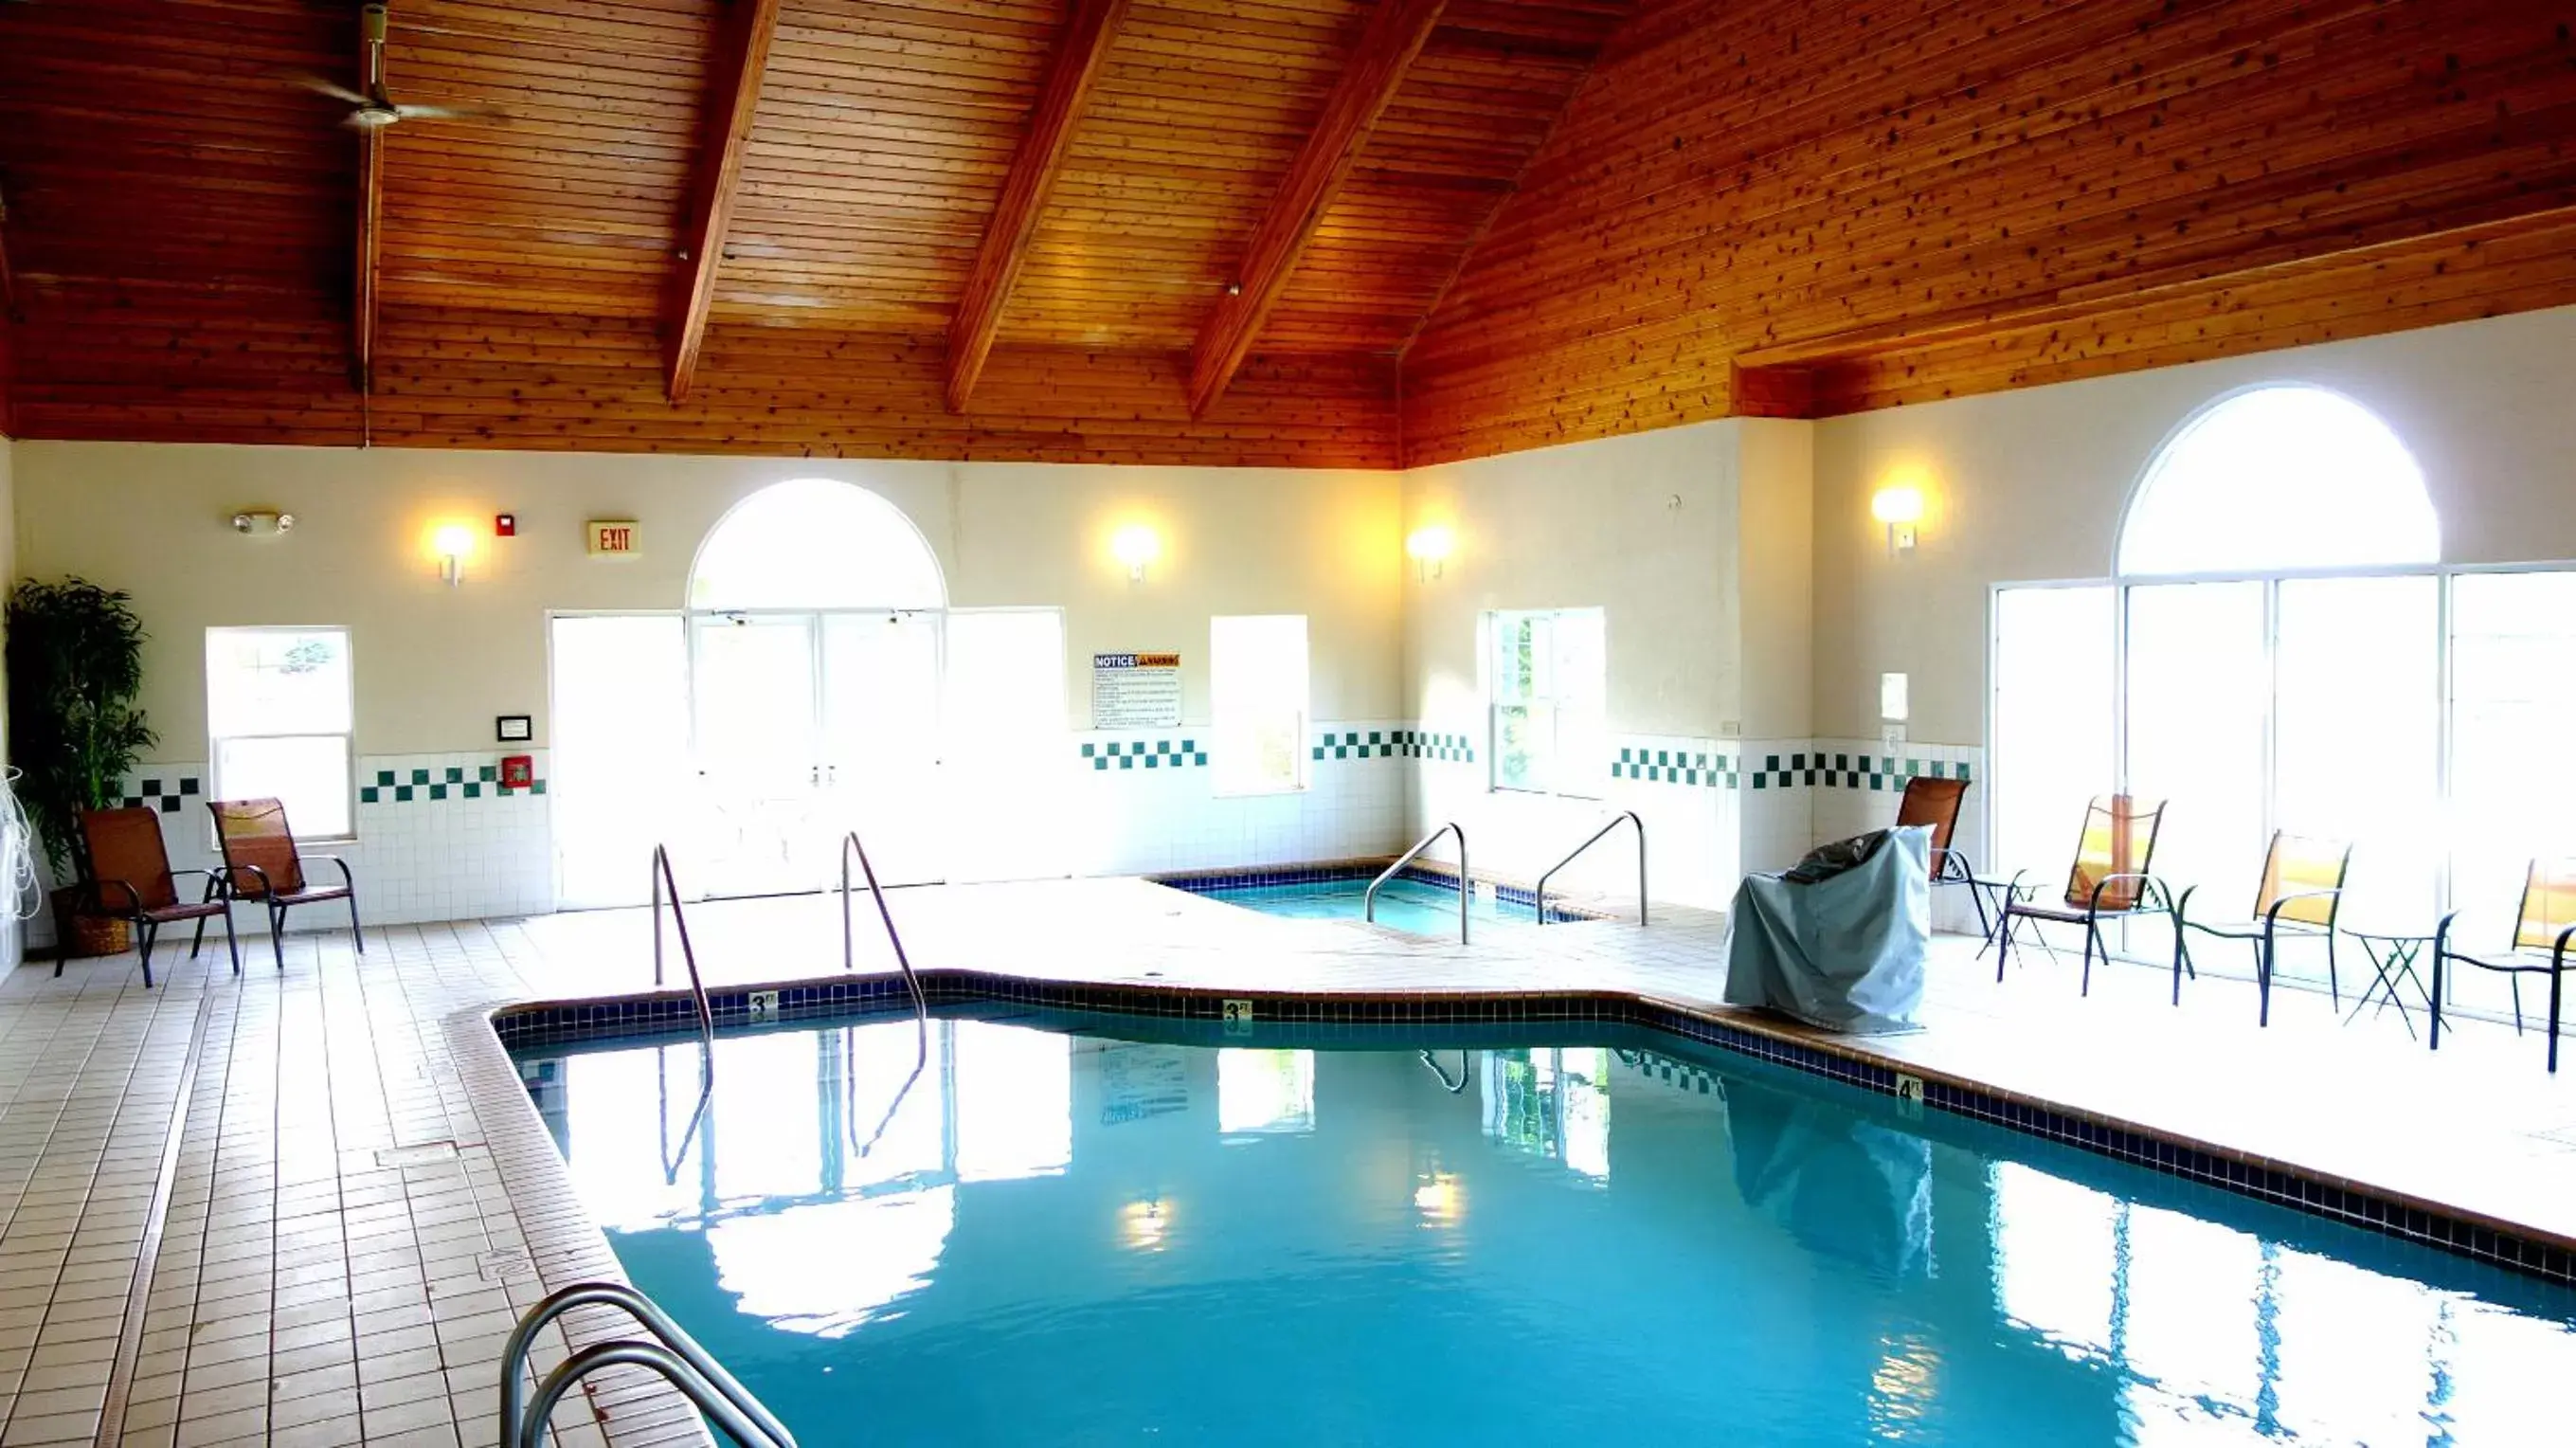 Hot Spring Bath, Swimming Pool in Country Inn River Falls